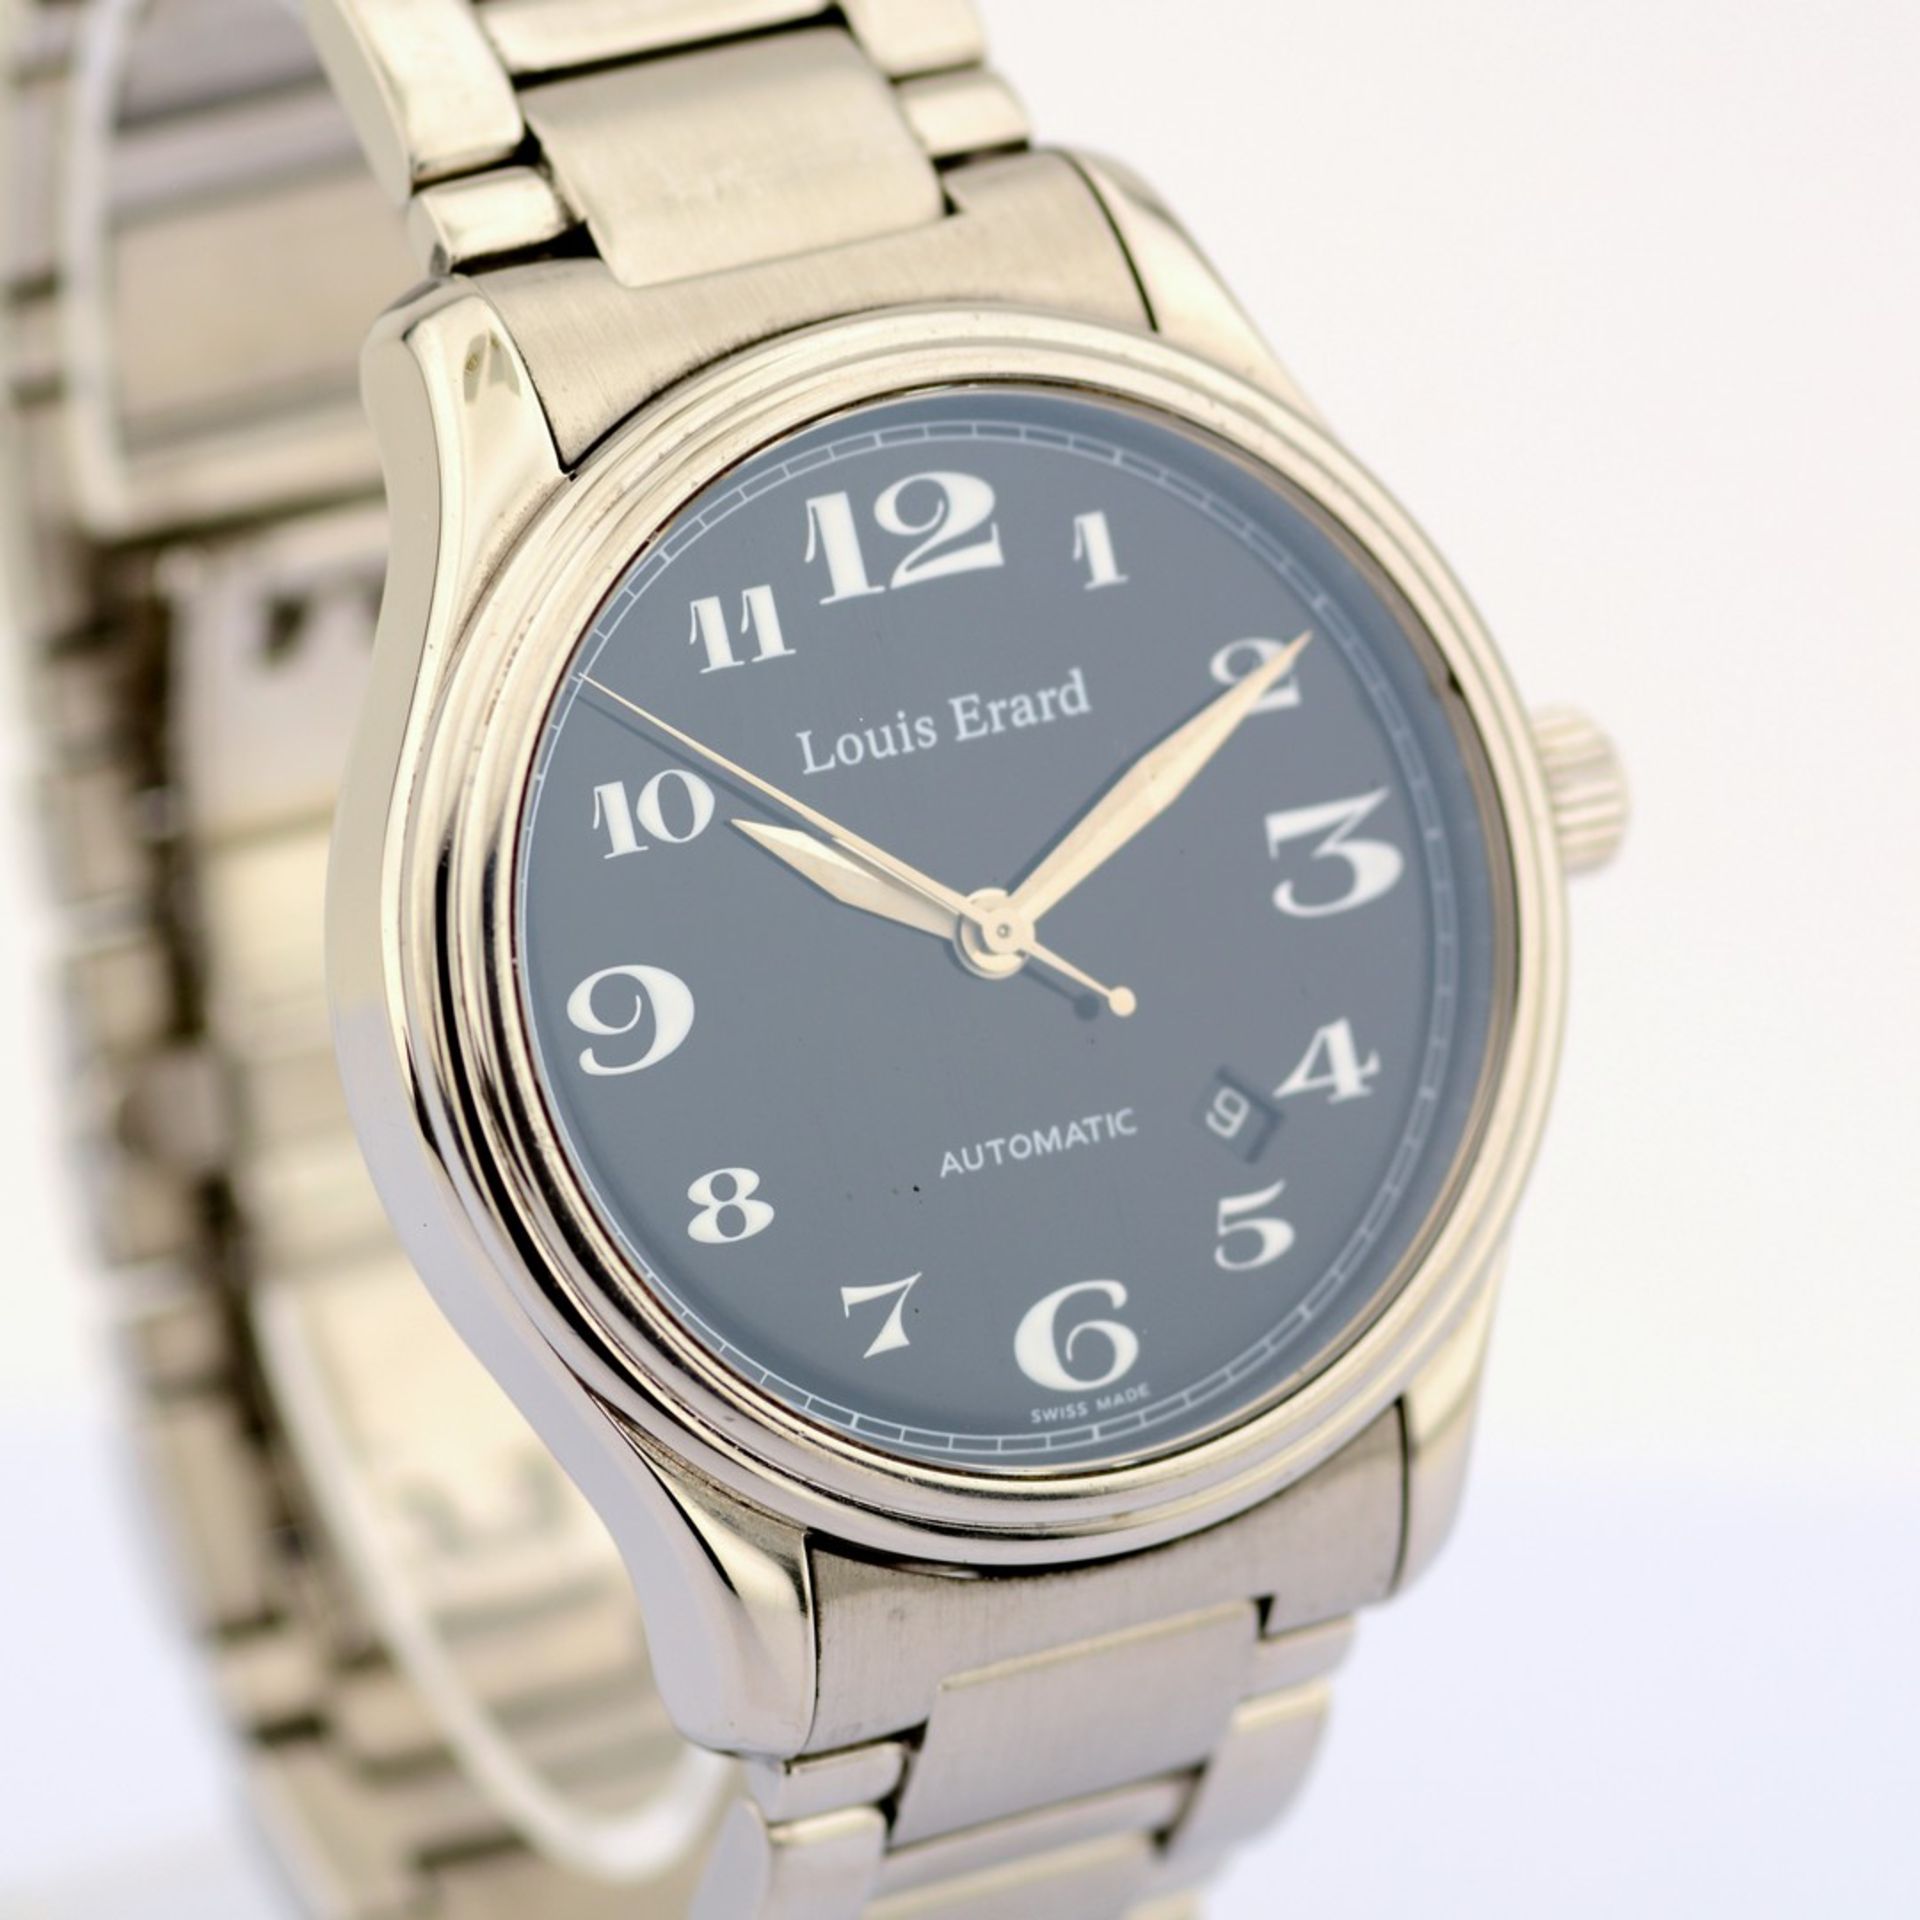 Louis Erard / Automatic - Gentlemen's Steel Wristwatch - Image 4 of 8